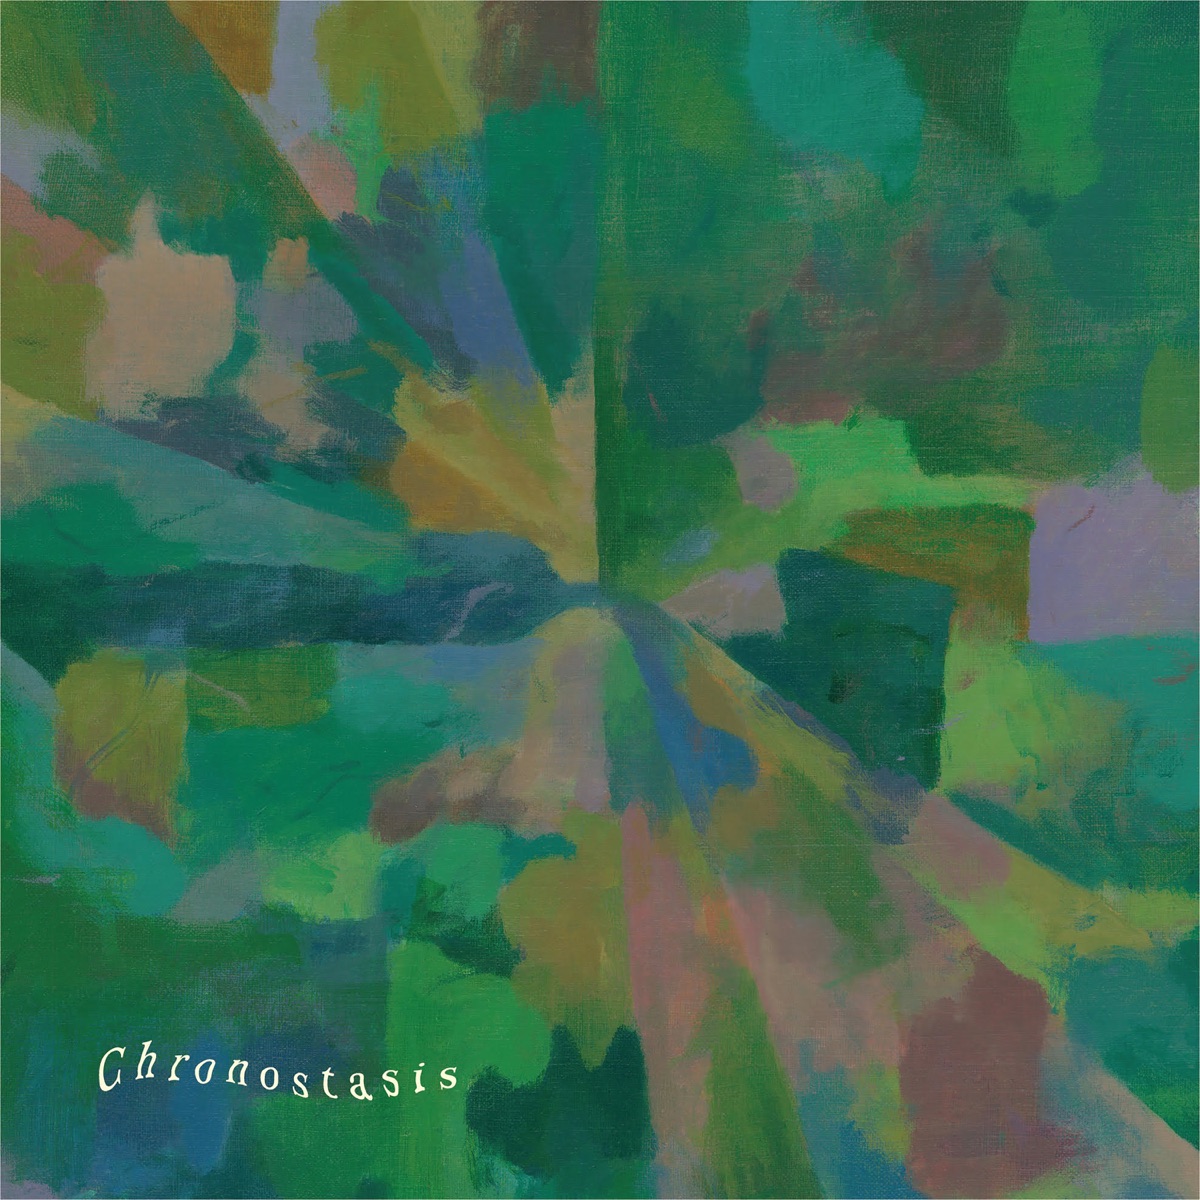 Cover for『BUMP OF CHICKEN - Chronostasis』from the release『Chronostasis』